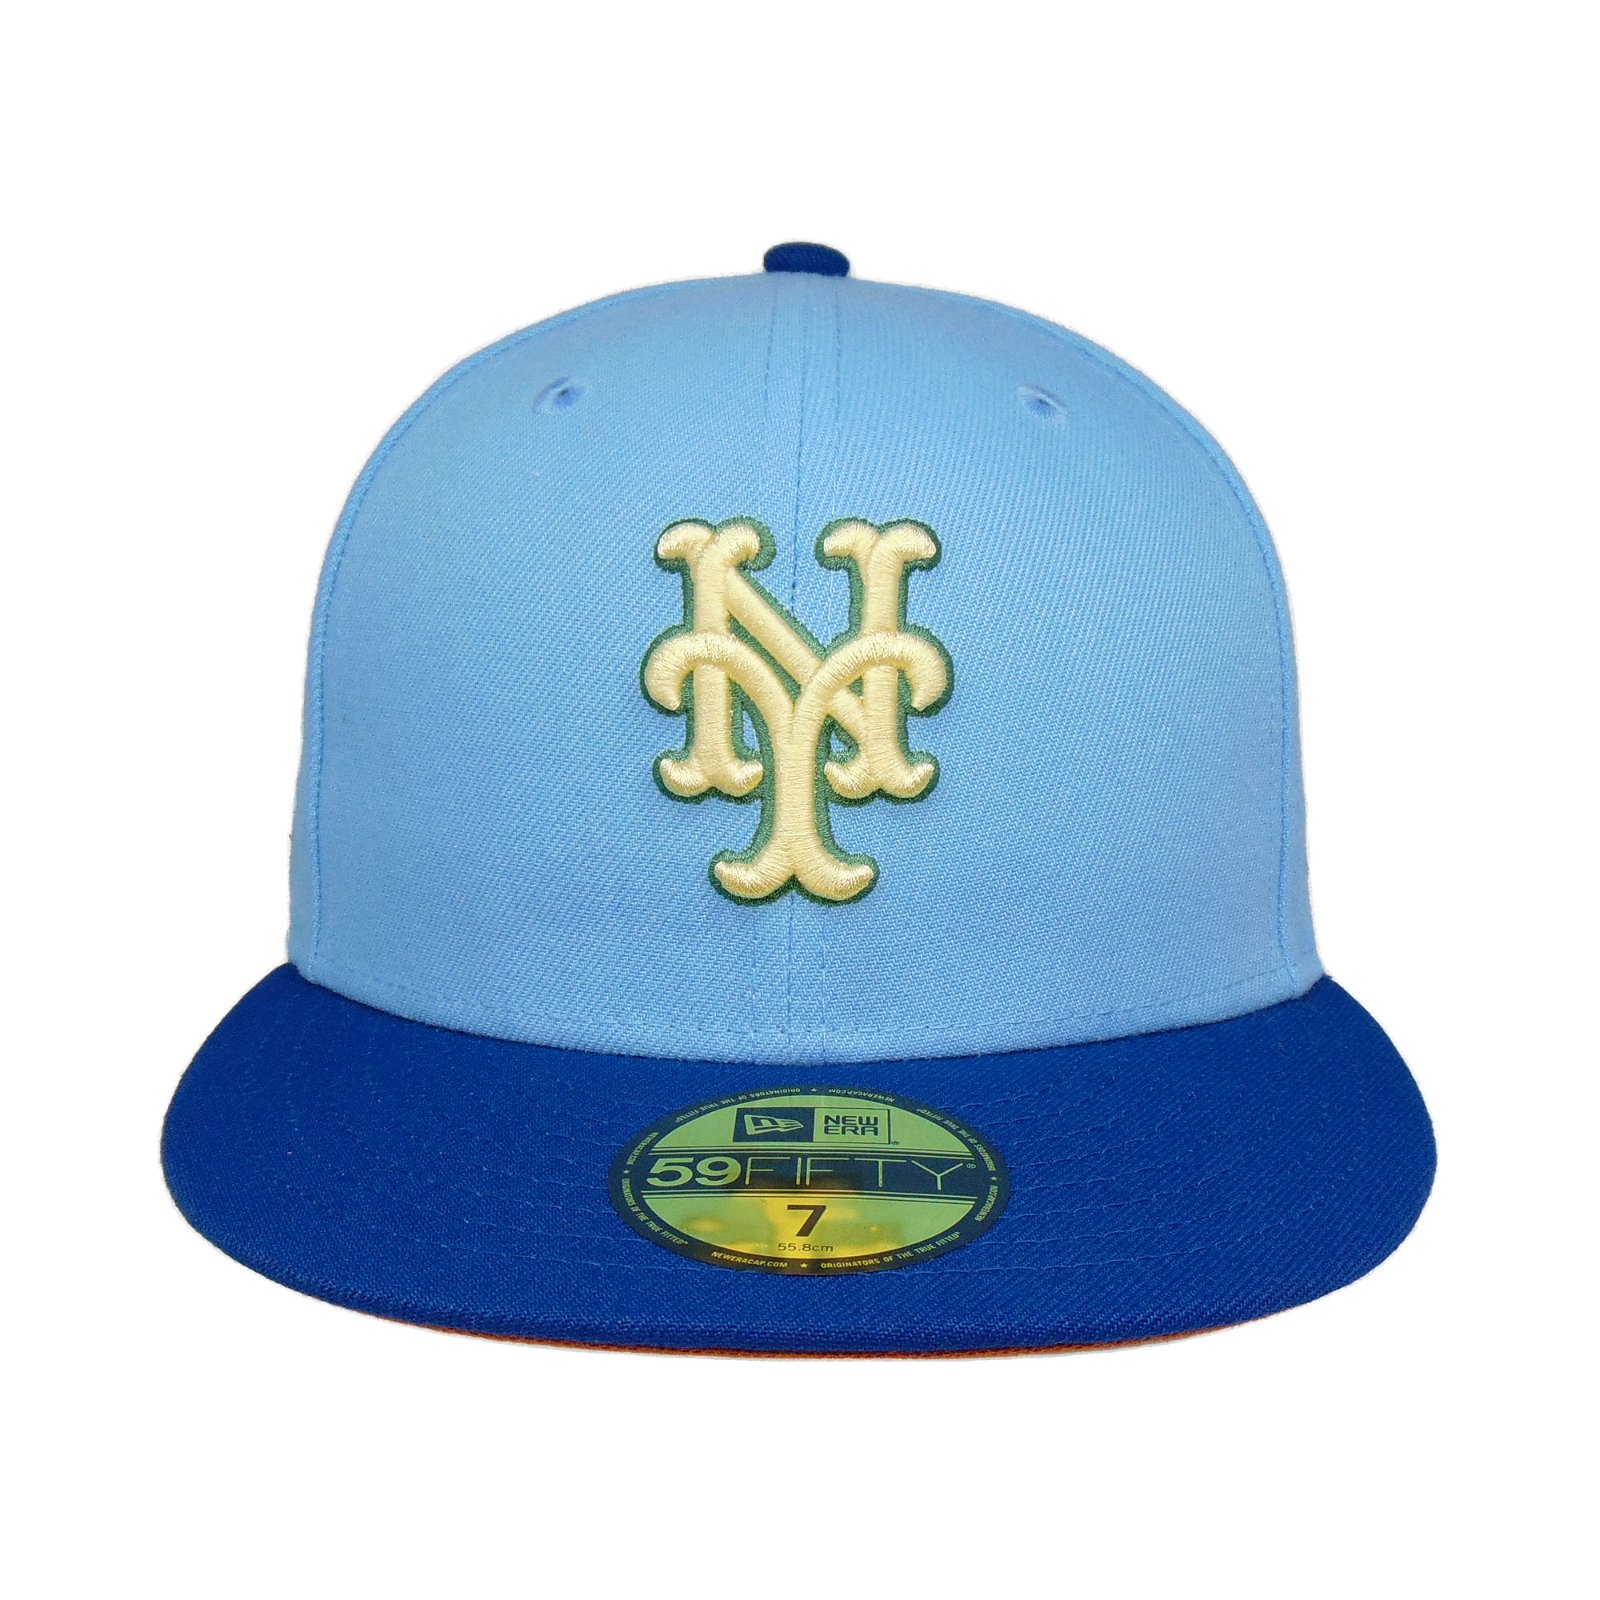 kaufe jetzt new york mets MLB team & custom new era 59fifty caps